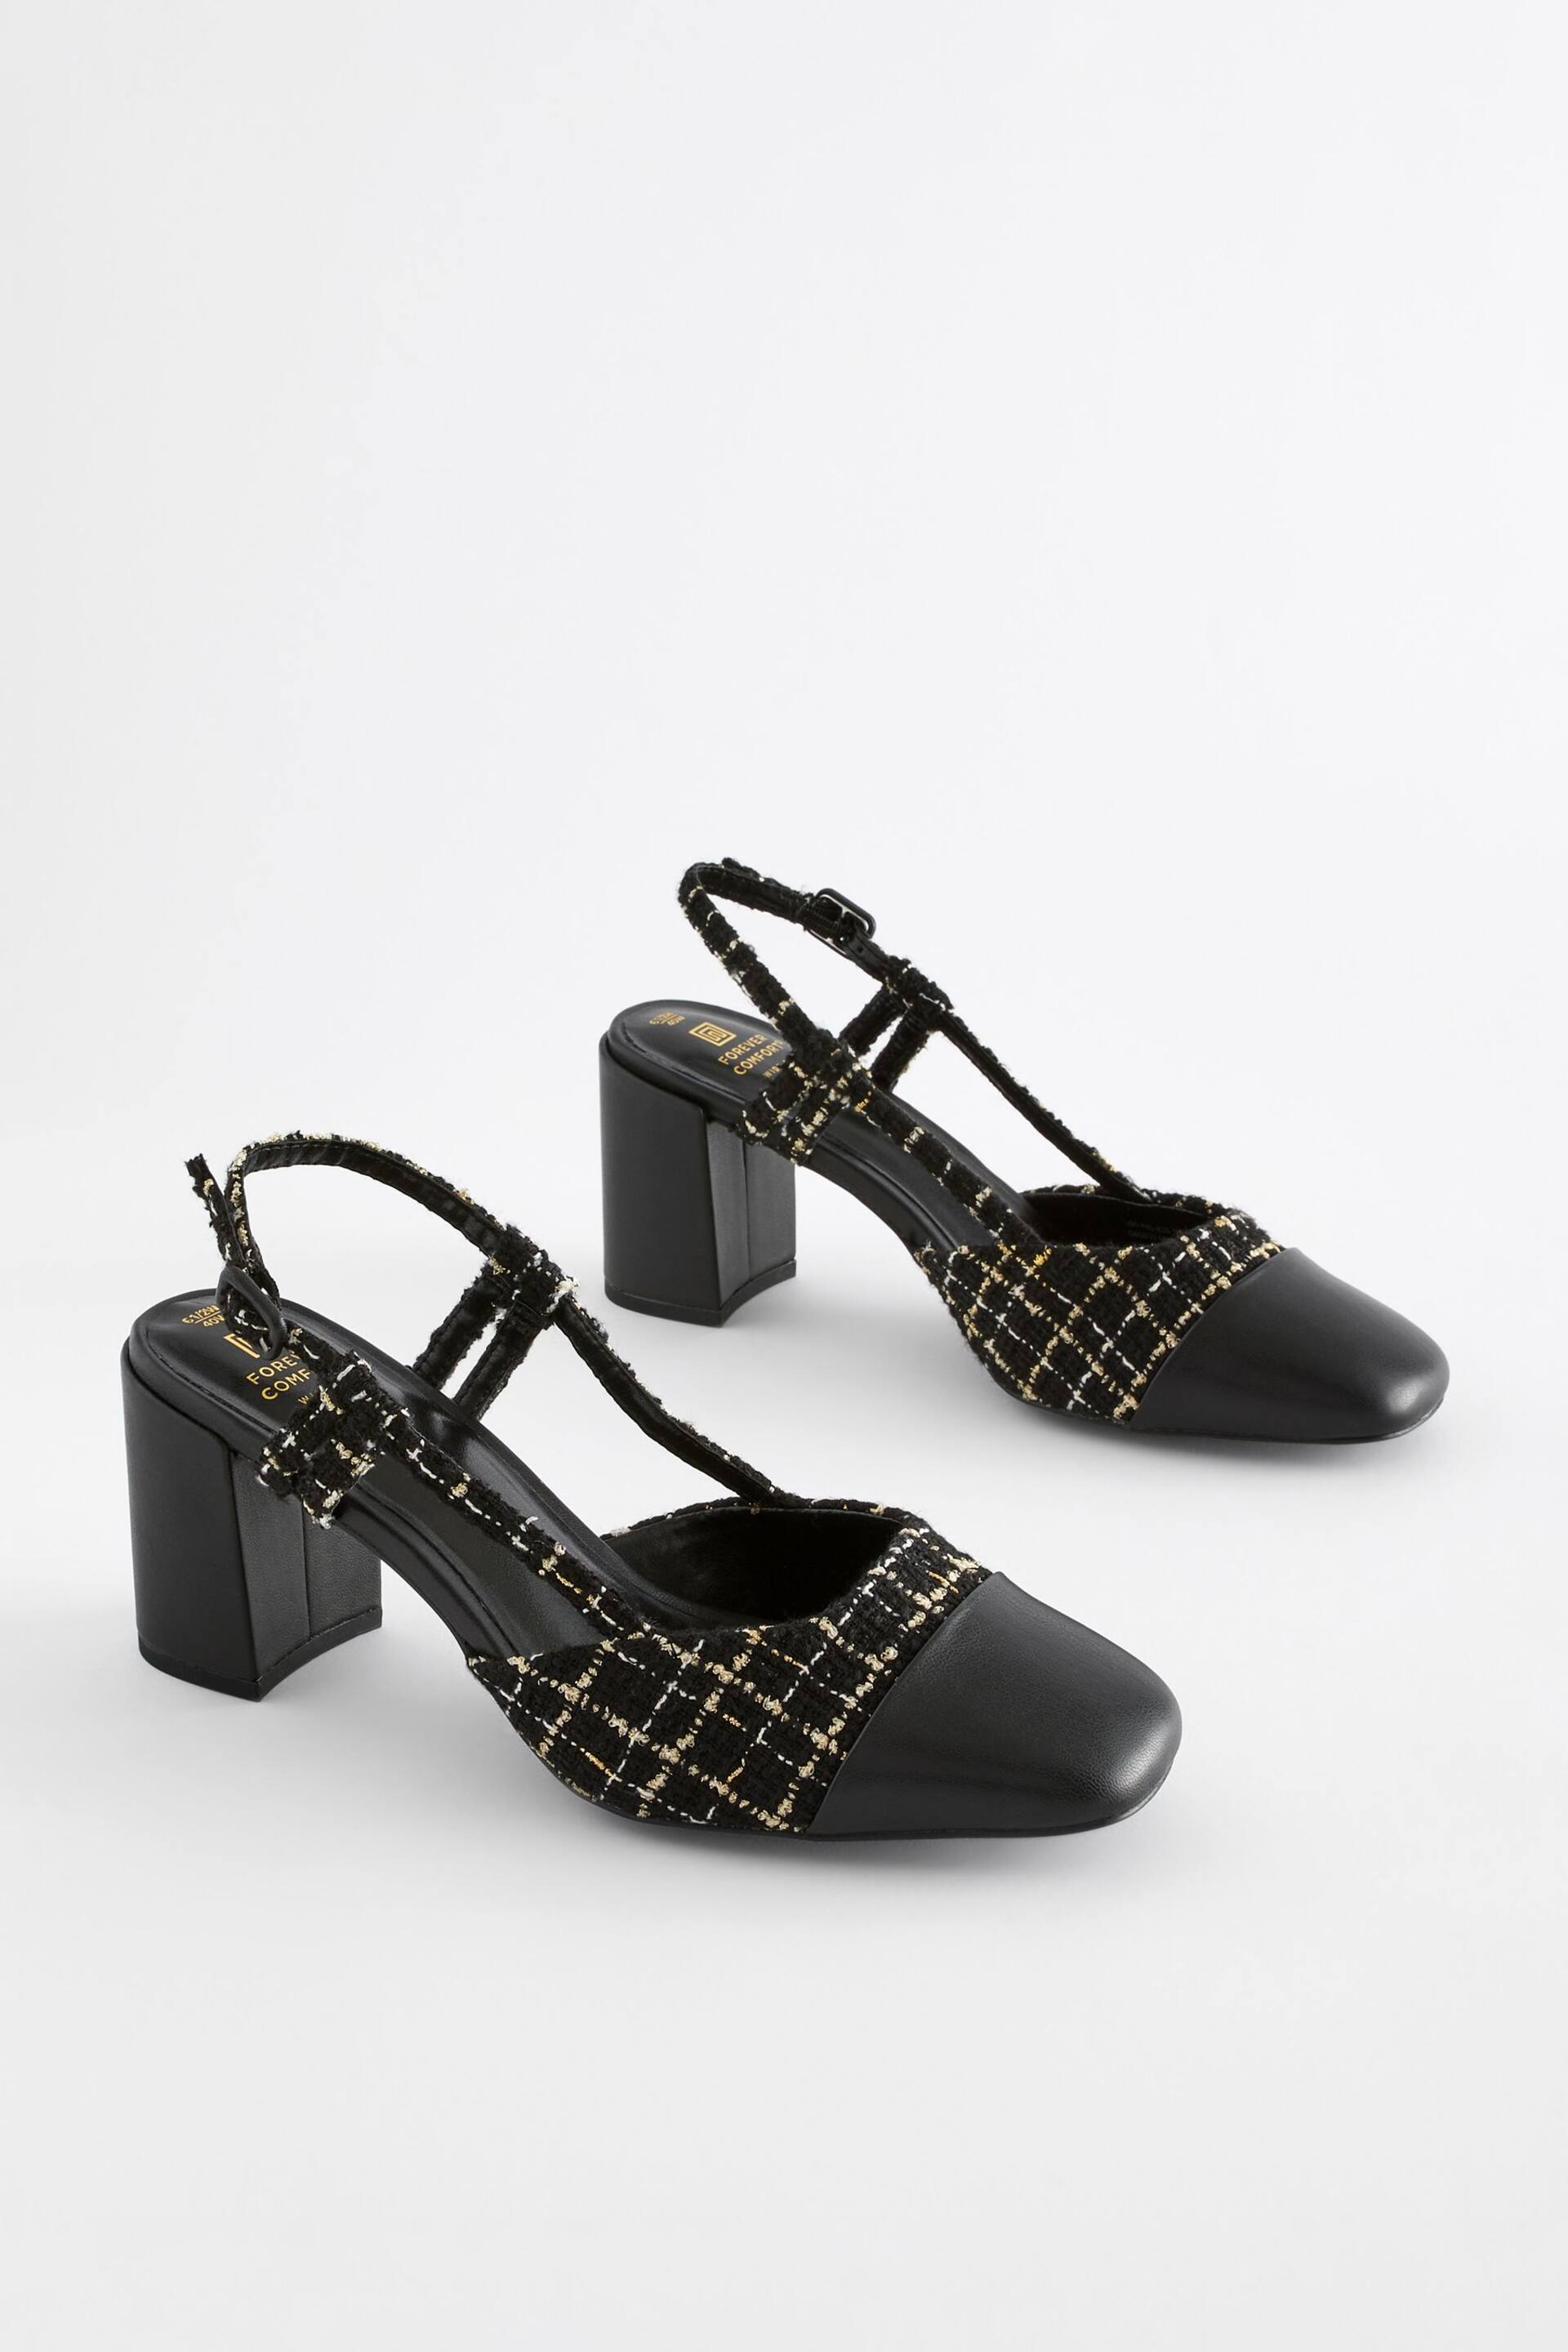 Monochrome Forever Comfort® Square Toe Slingback Block Heel Shoes - Image 6 of 12